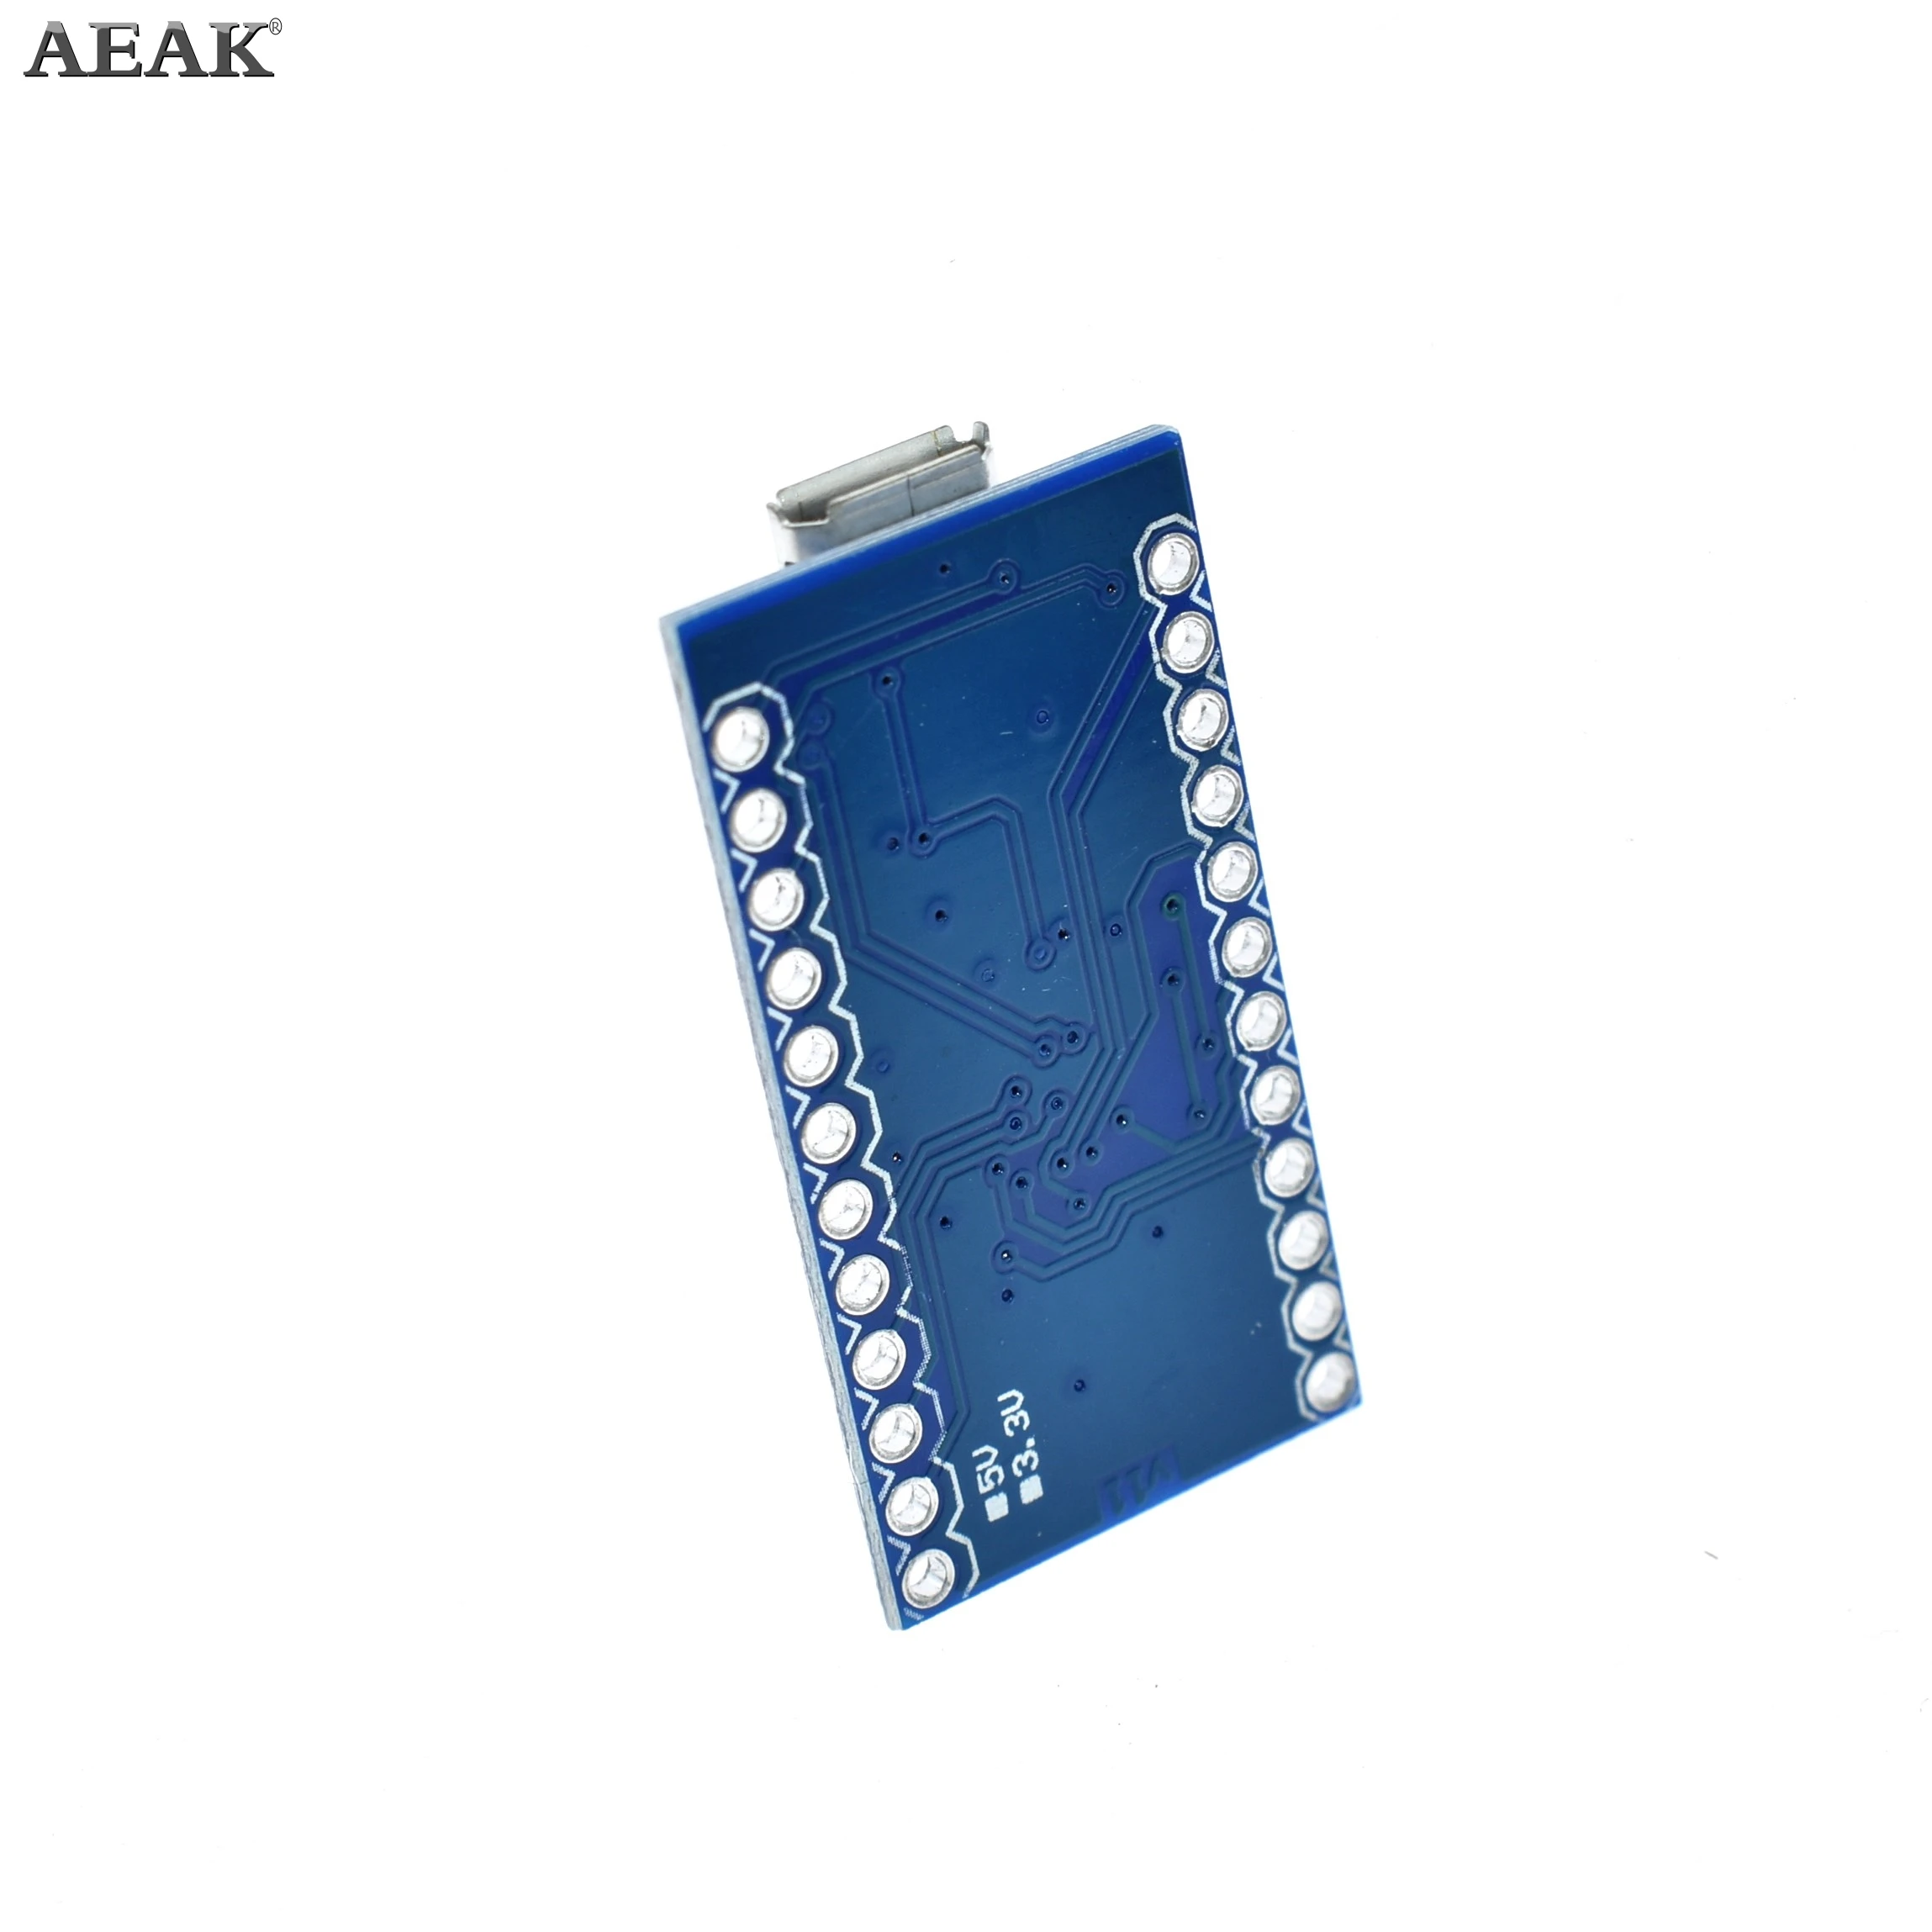 AEAK Pro Micro ATmega32U4 5V 16 МГц заменить ATmega328 для arduino Pro Mini с 2 Row штыревые для Леонардо USB Интерфейс